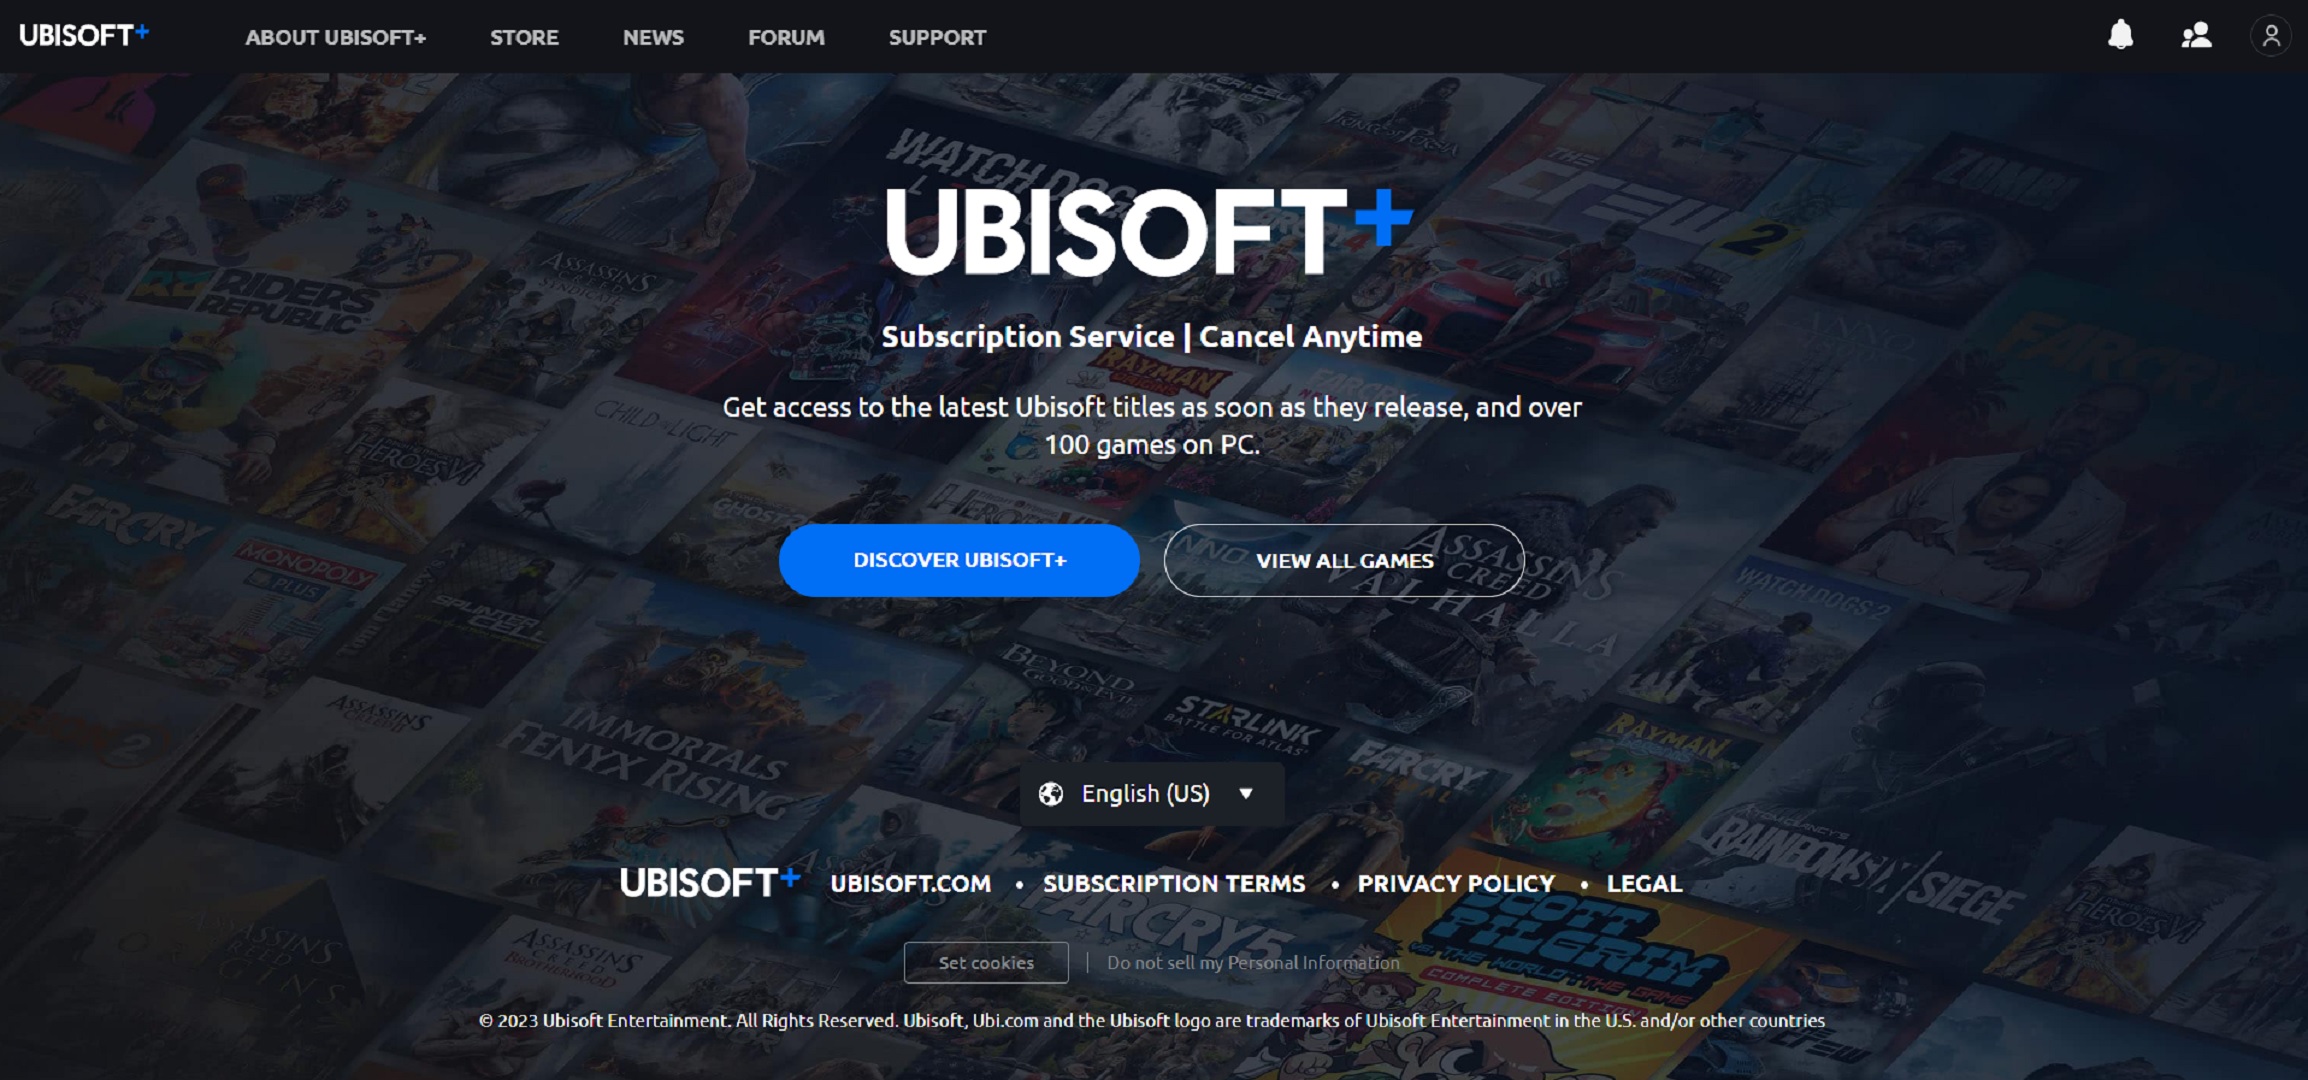 Ubisoft gaming subscription service, plans